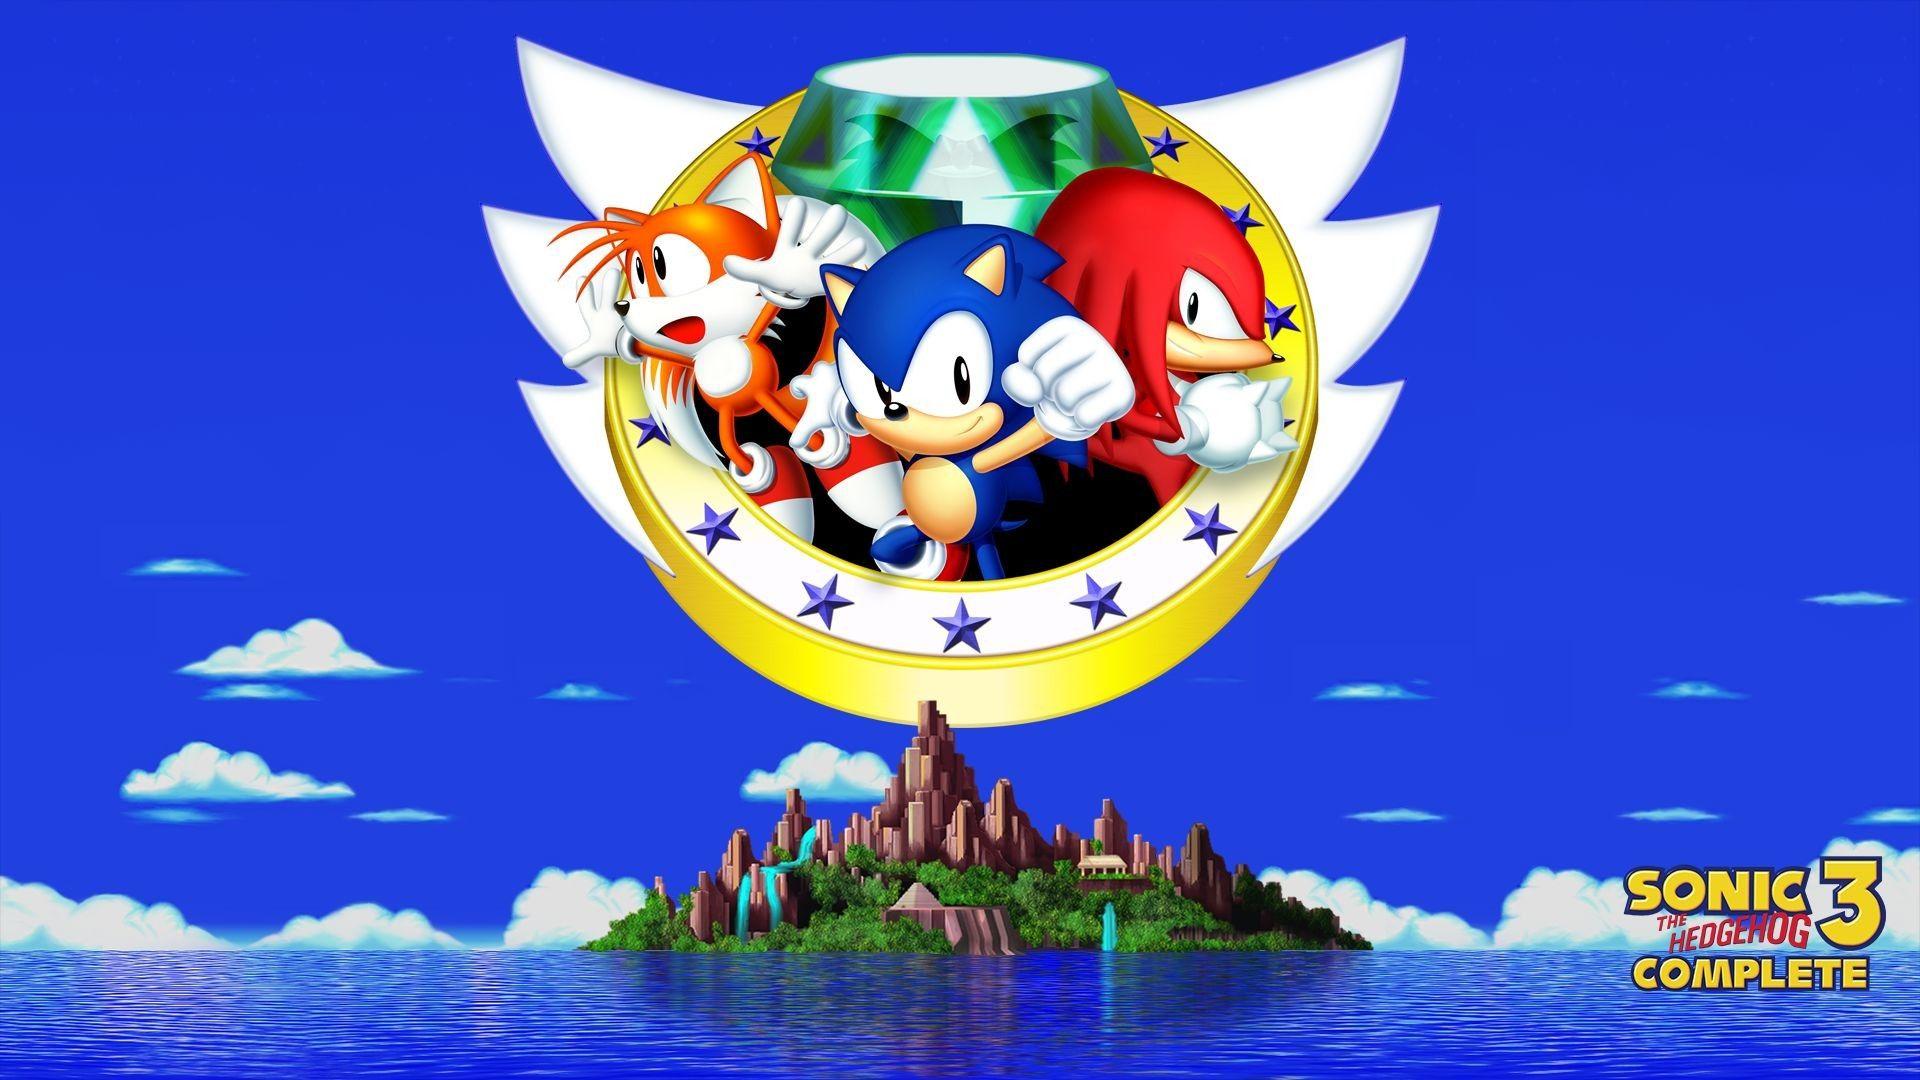 Classic Sonic Wallpaper HD